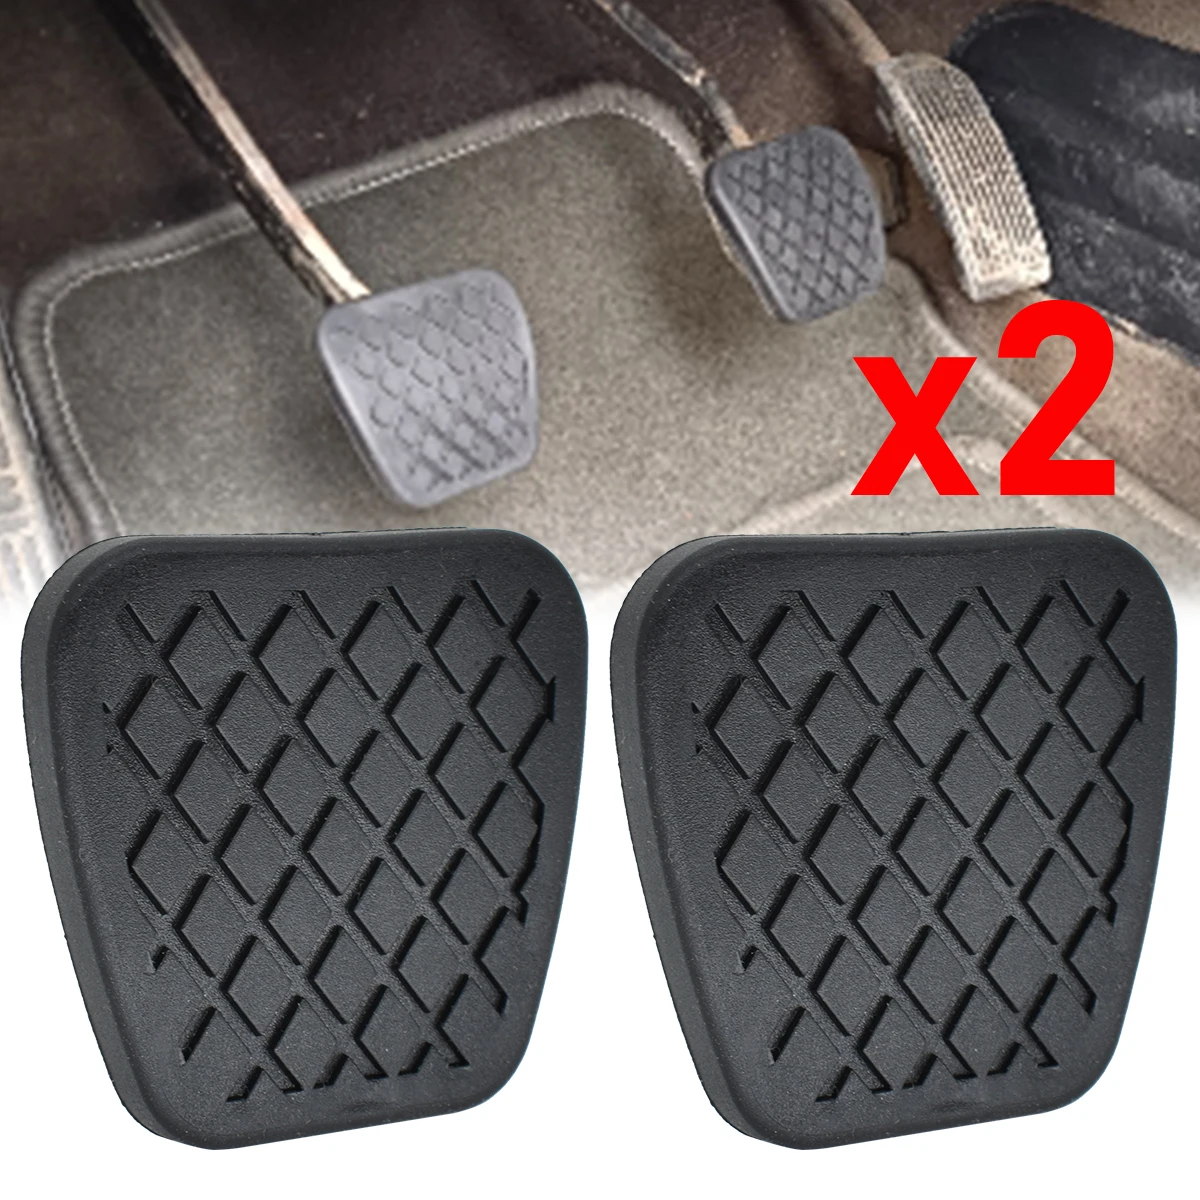 2Pcs Car Brake Clutch Pedal Pad Rubber Cover For Honda Civic Accord CR-V... - $7.93